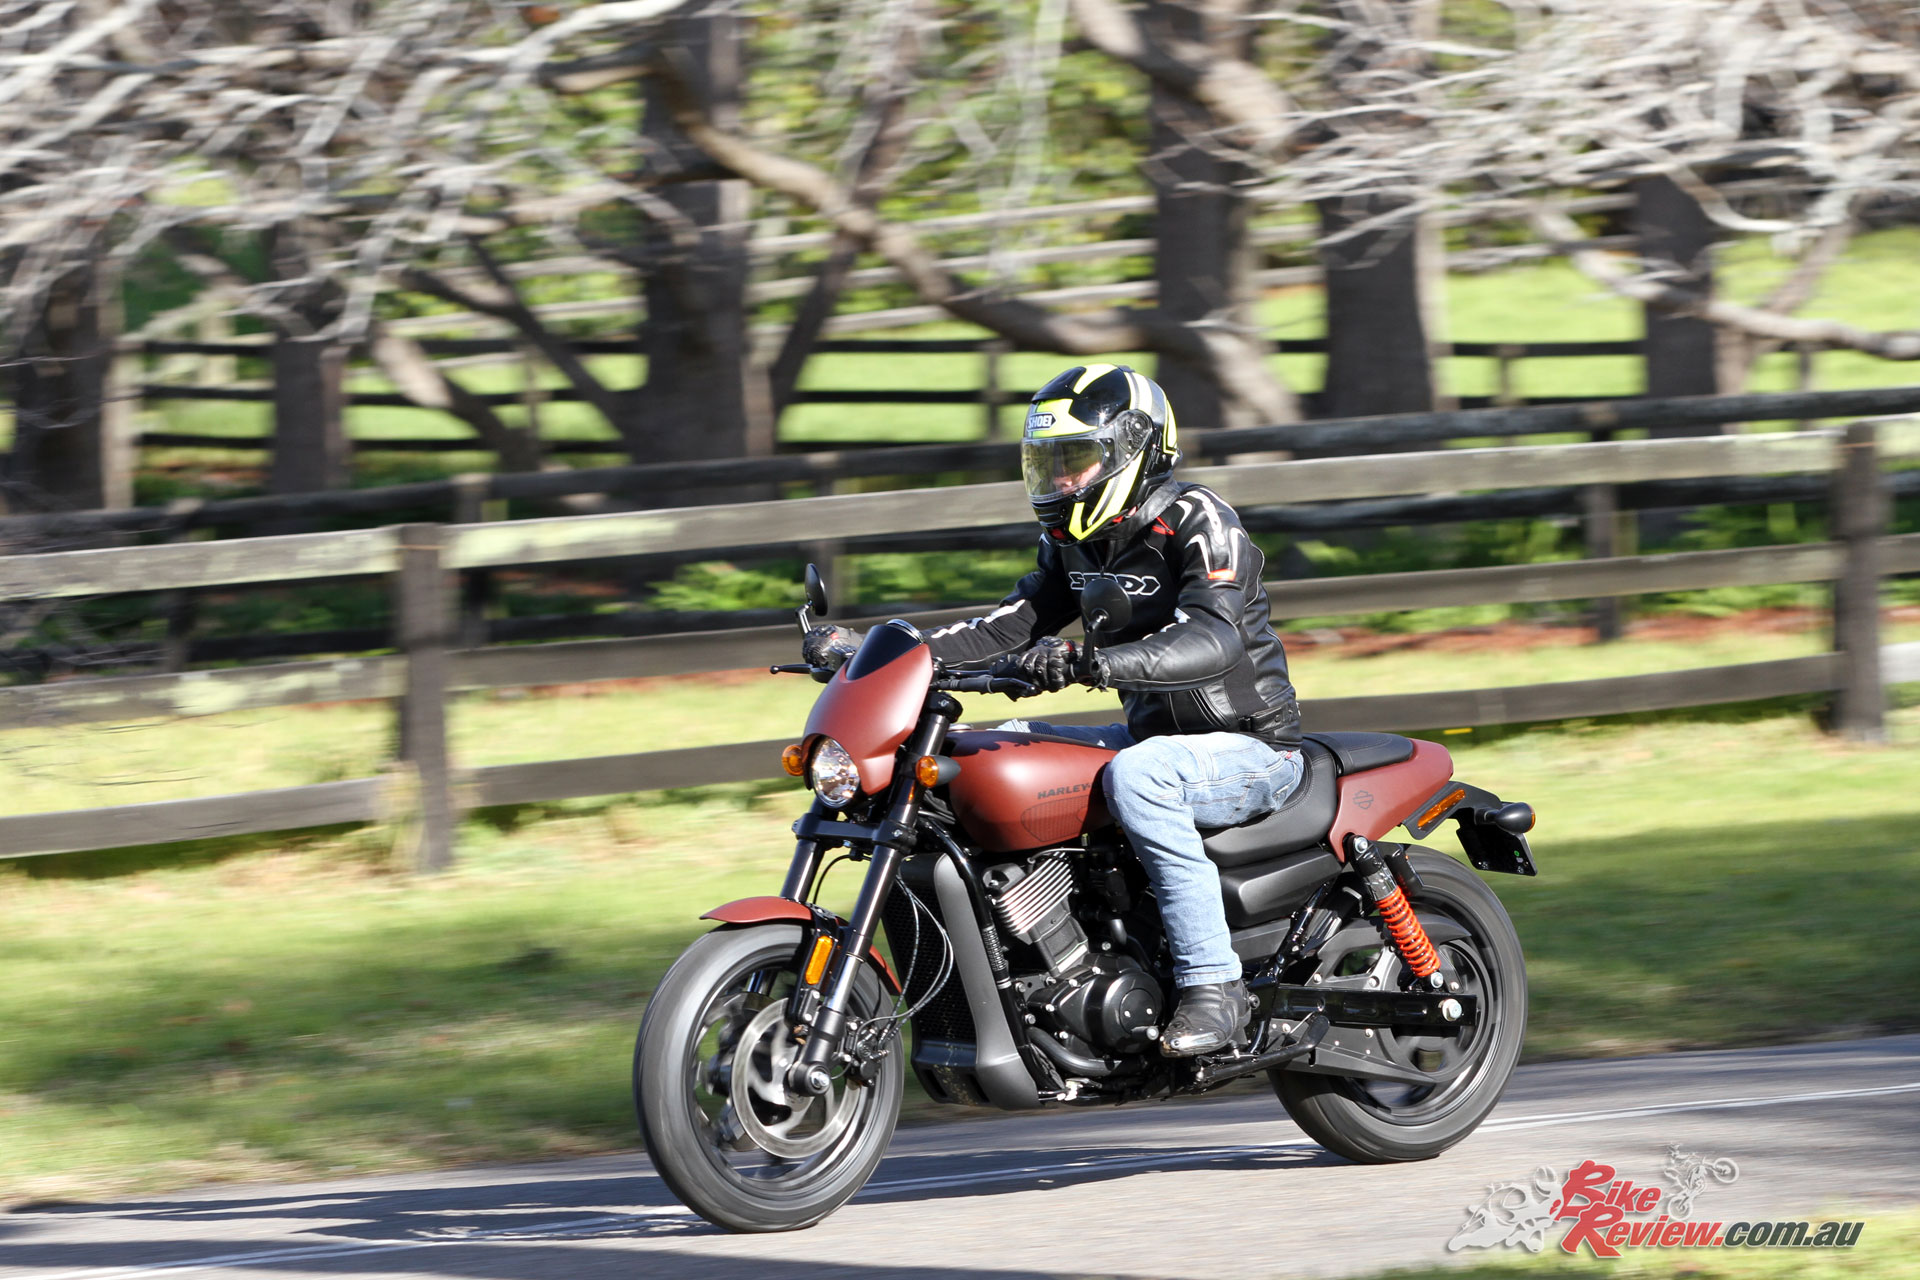 Review: 2018 Harley-Davidson Street Rod 750 - Bike Review